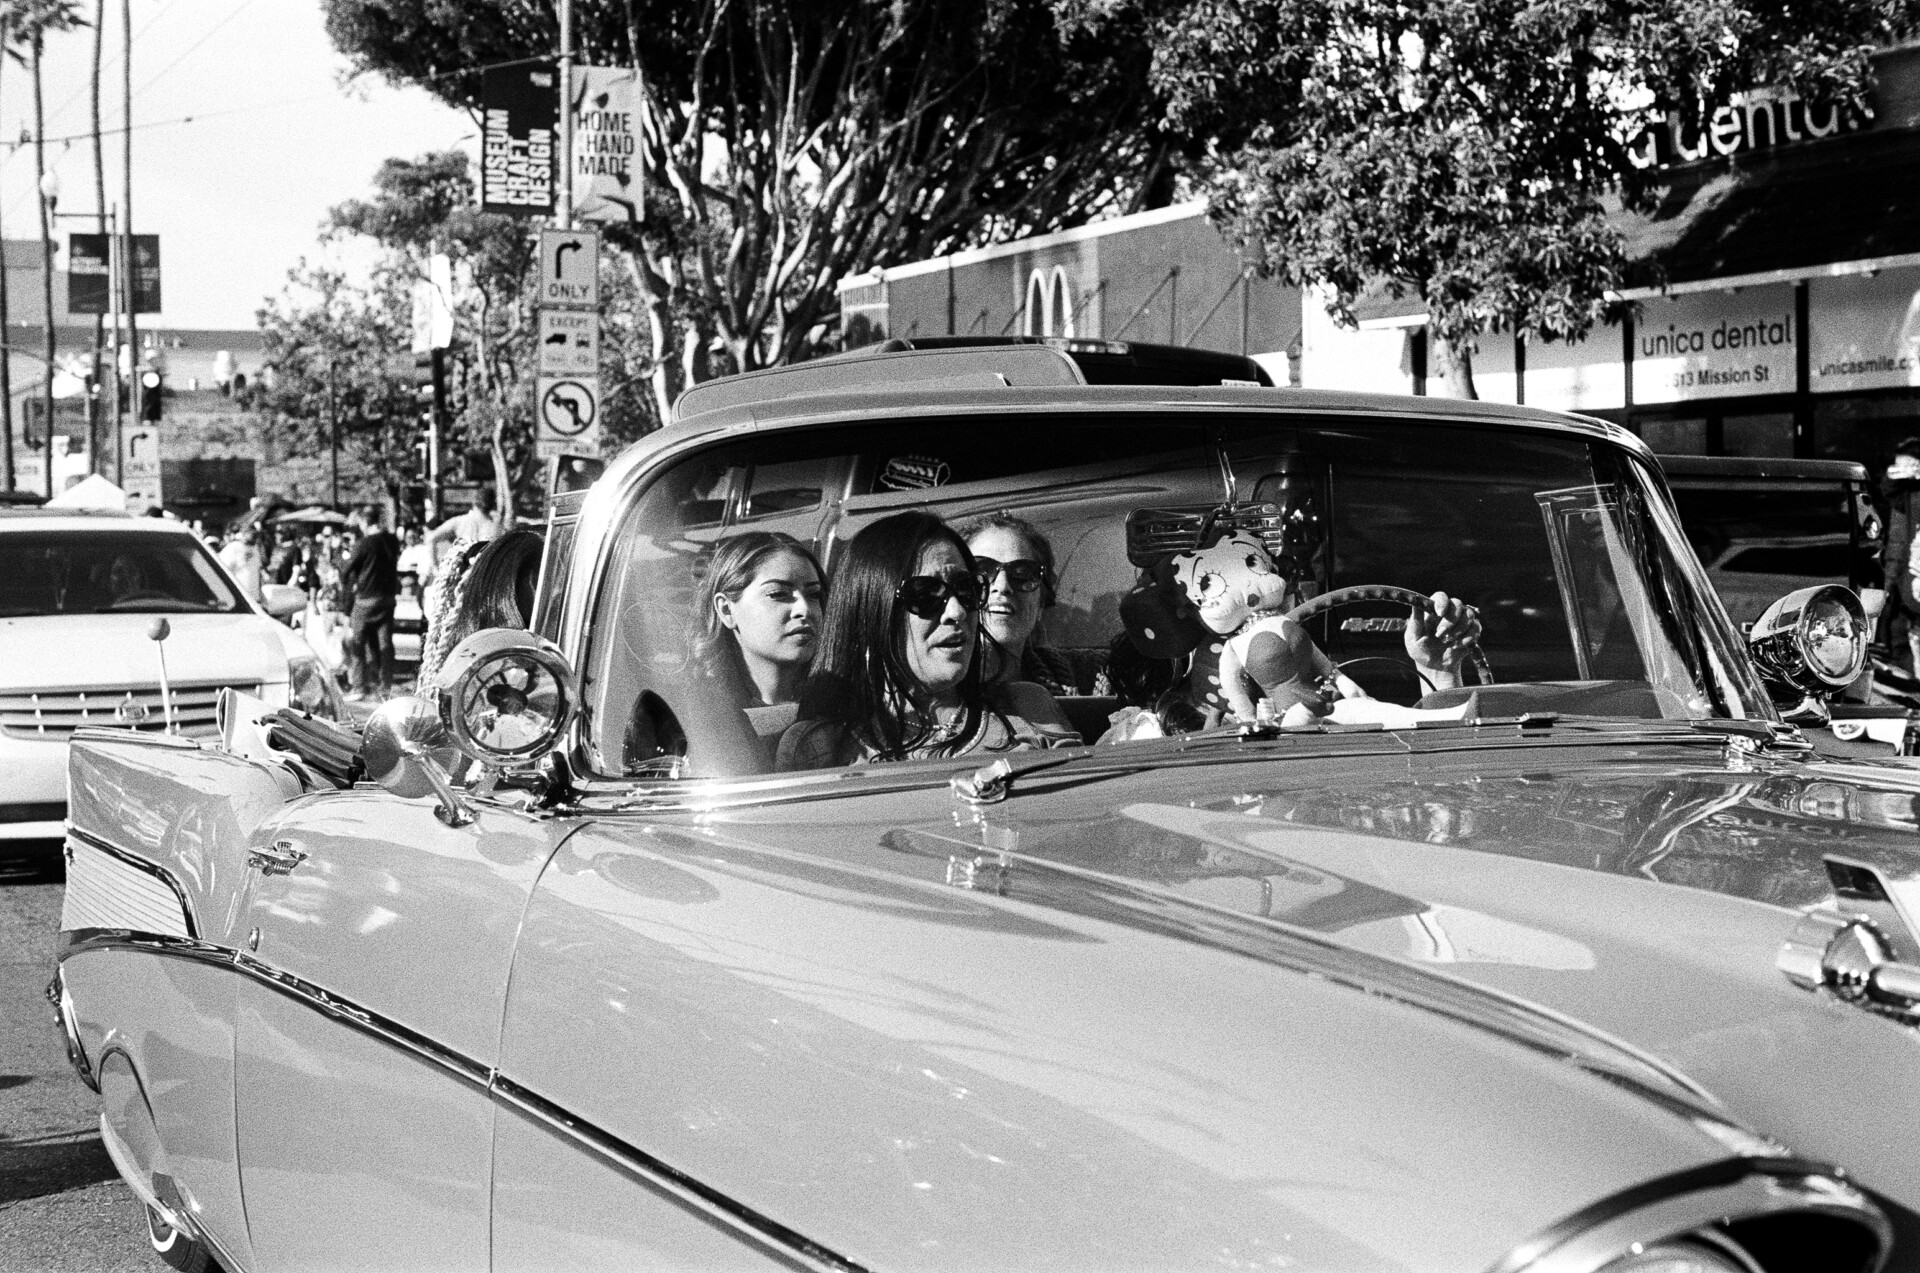 Three women cruise down Mission Street in their lowrider car.